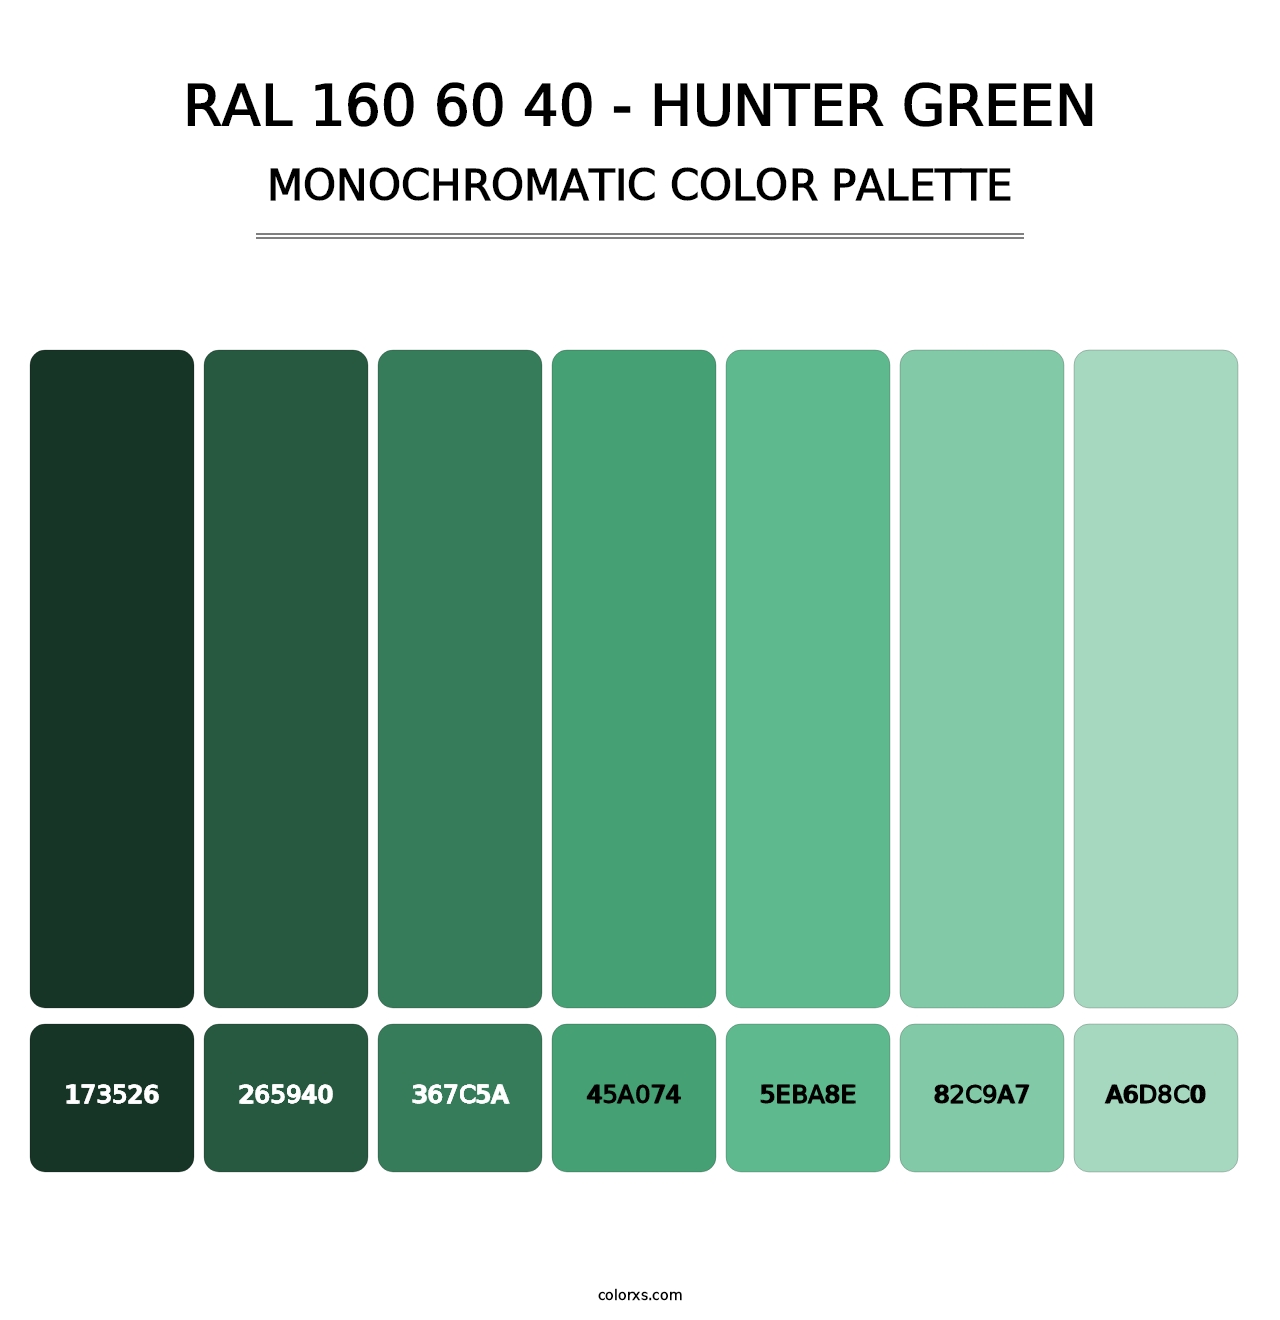 RAL 160 60 40 - Hunter Green - Monochromatic Color Palette